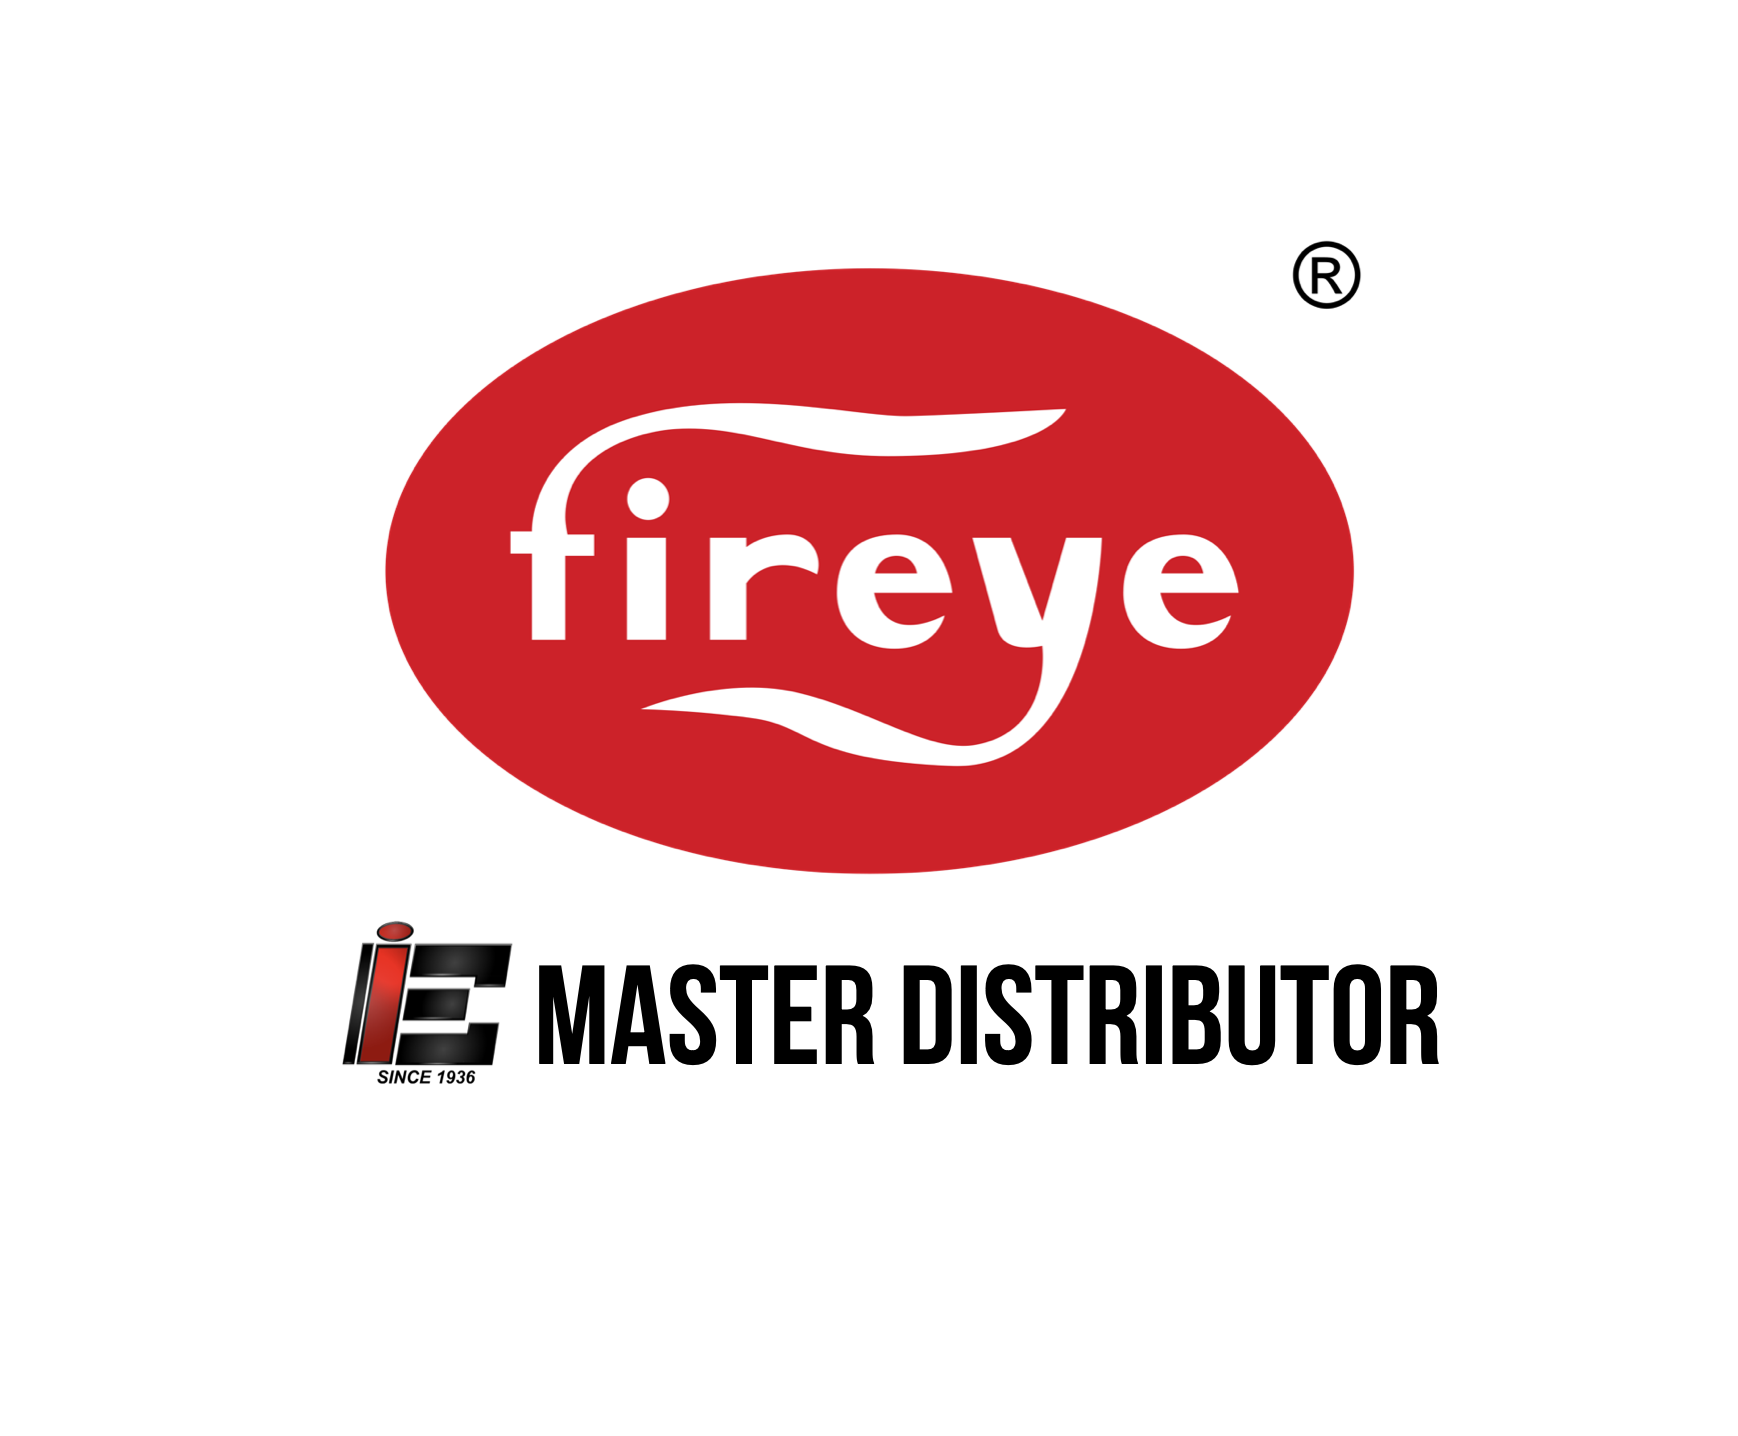 Industrial Equipment Company Named Master Distributor of Fireye